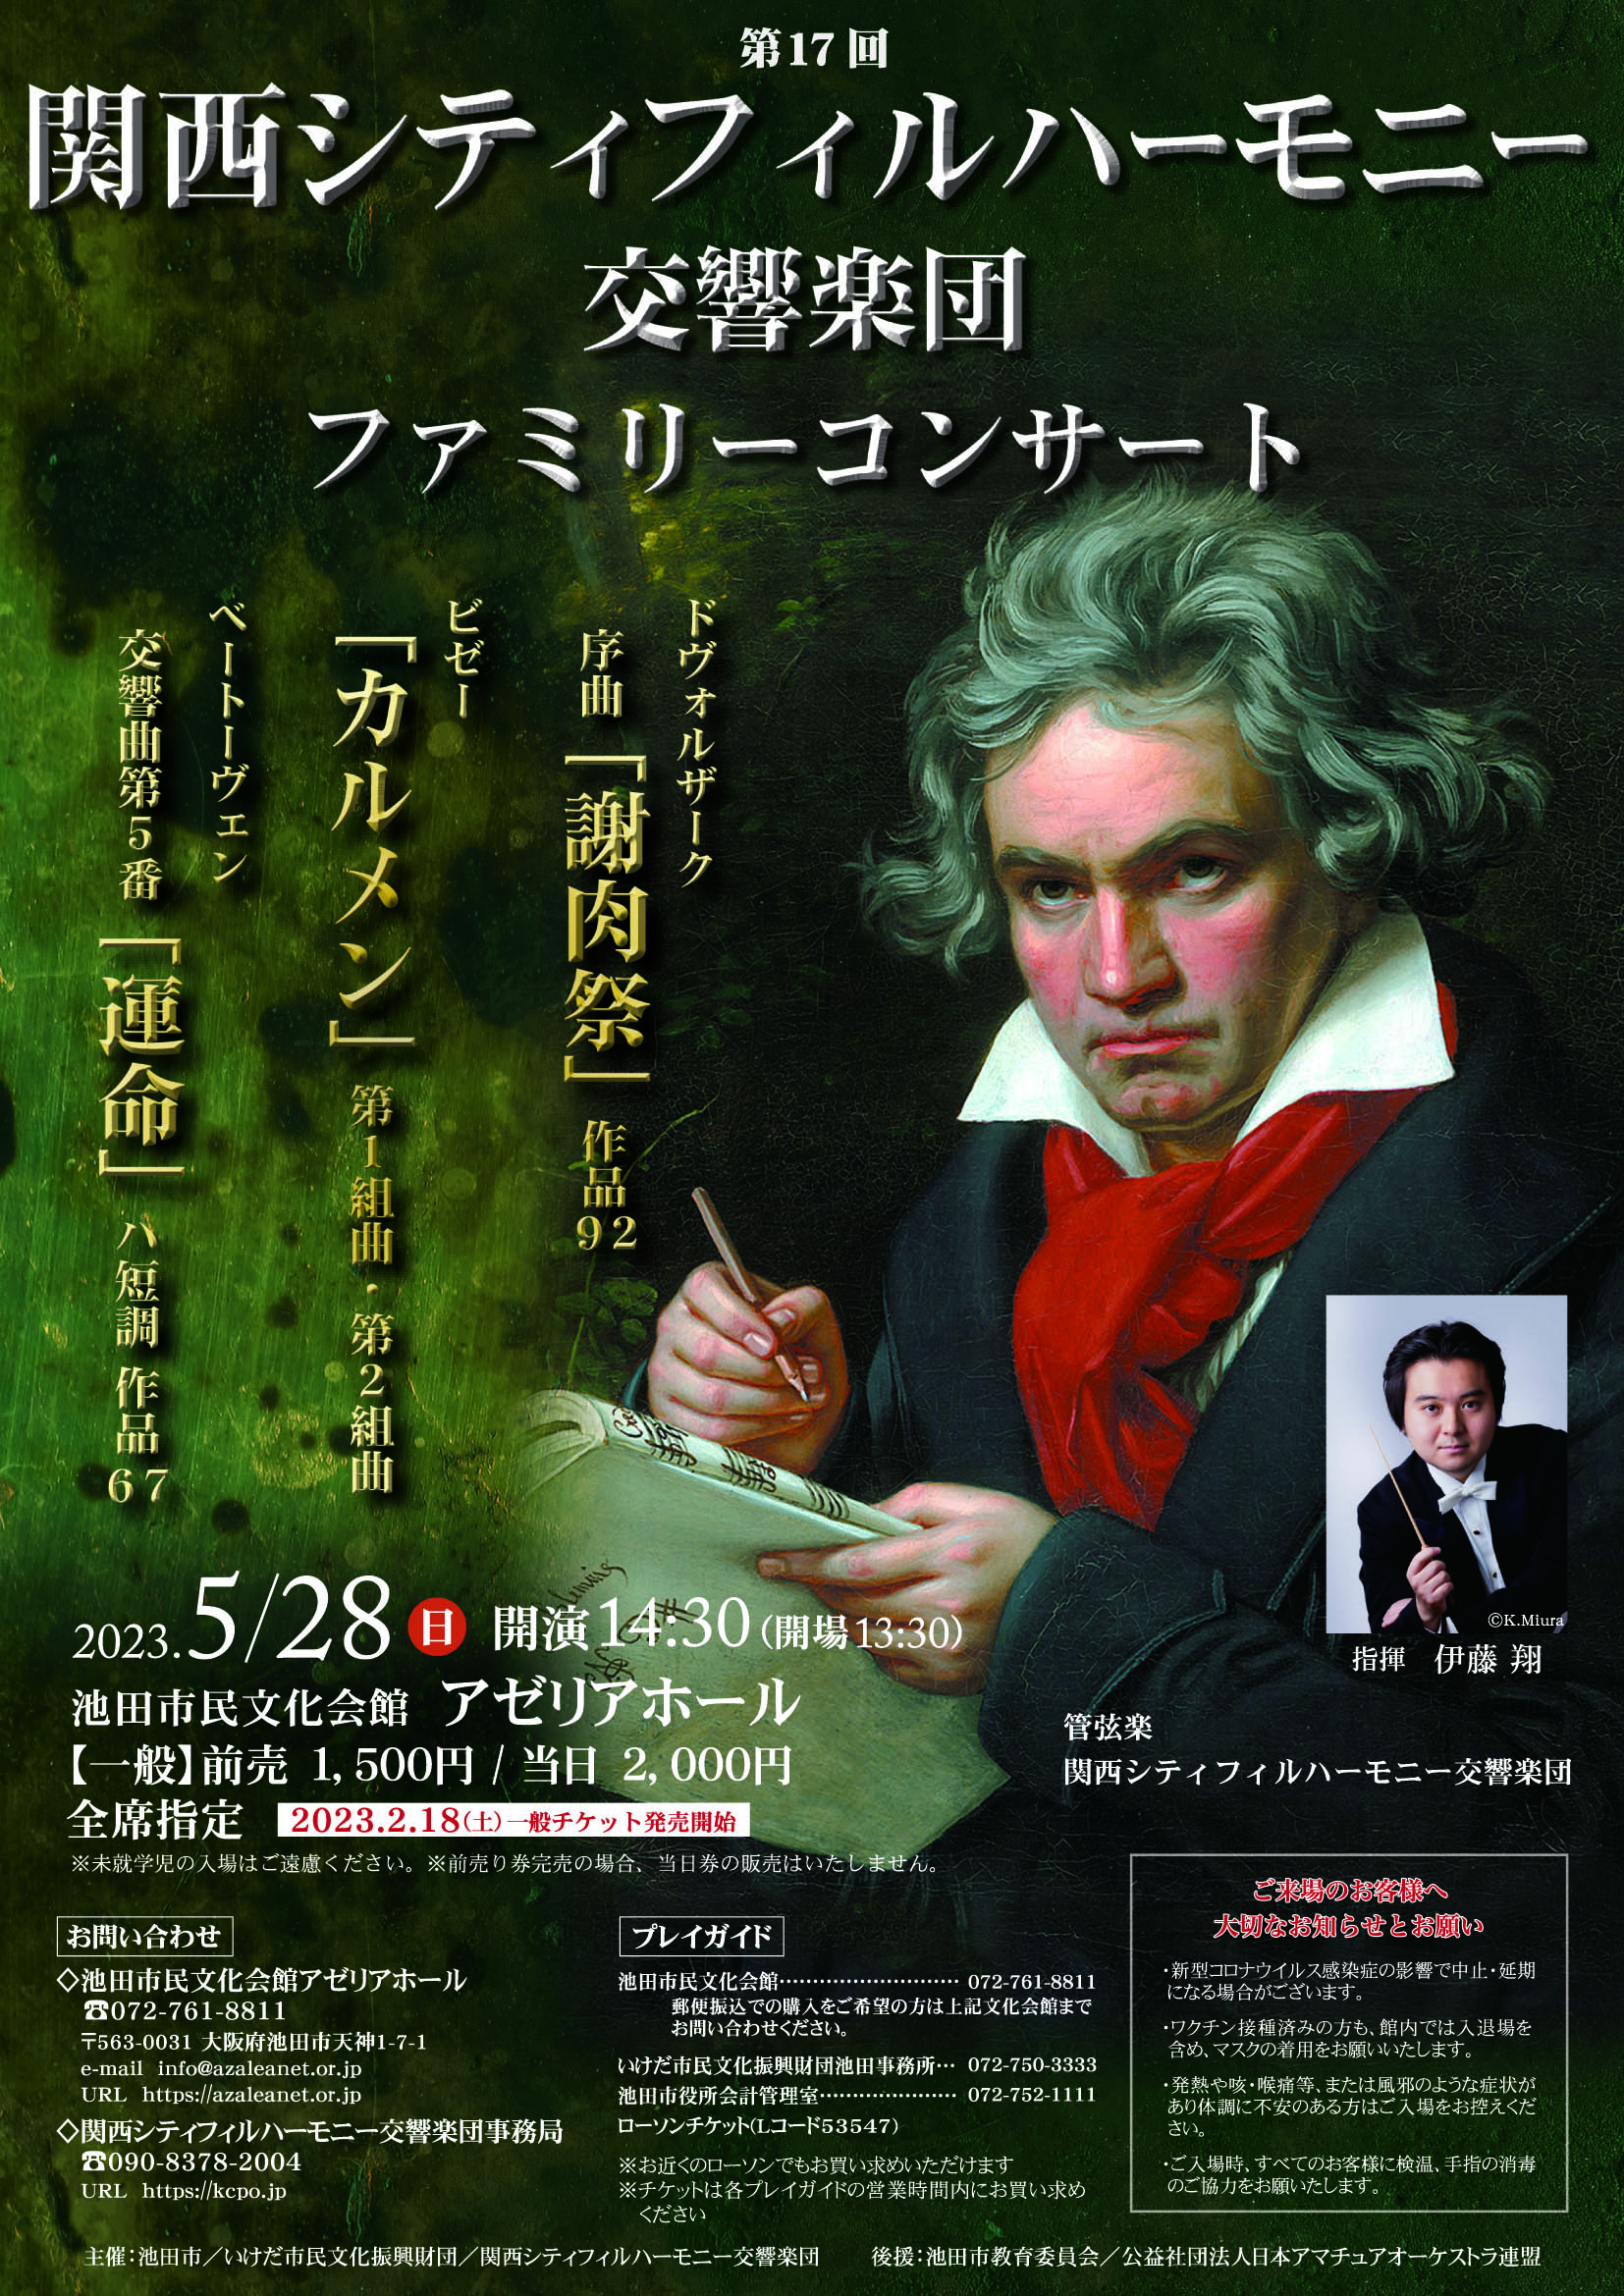 Kansai City Philharmonic Orchestra